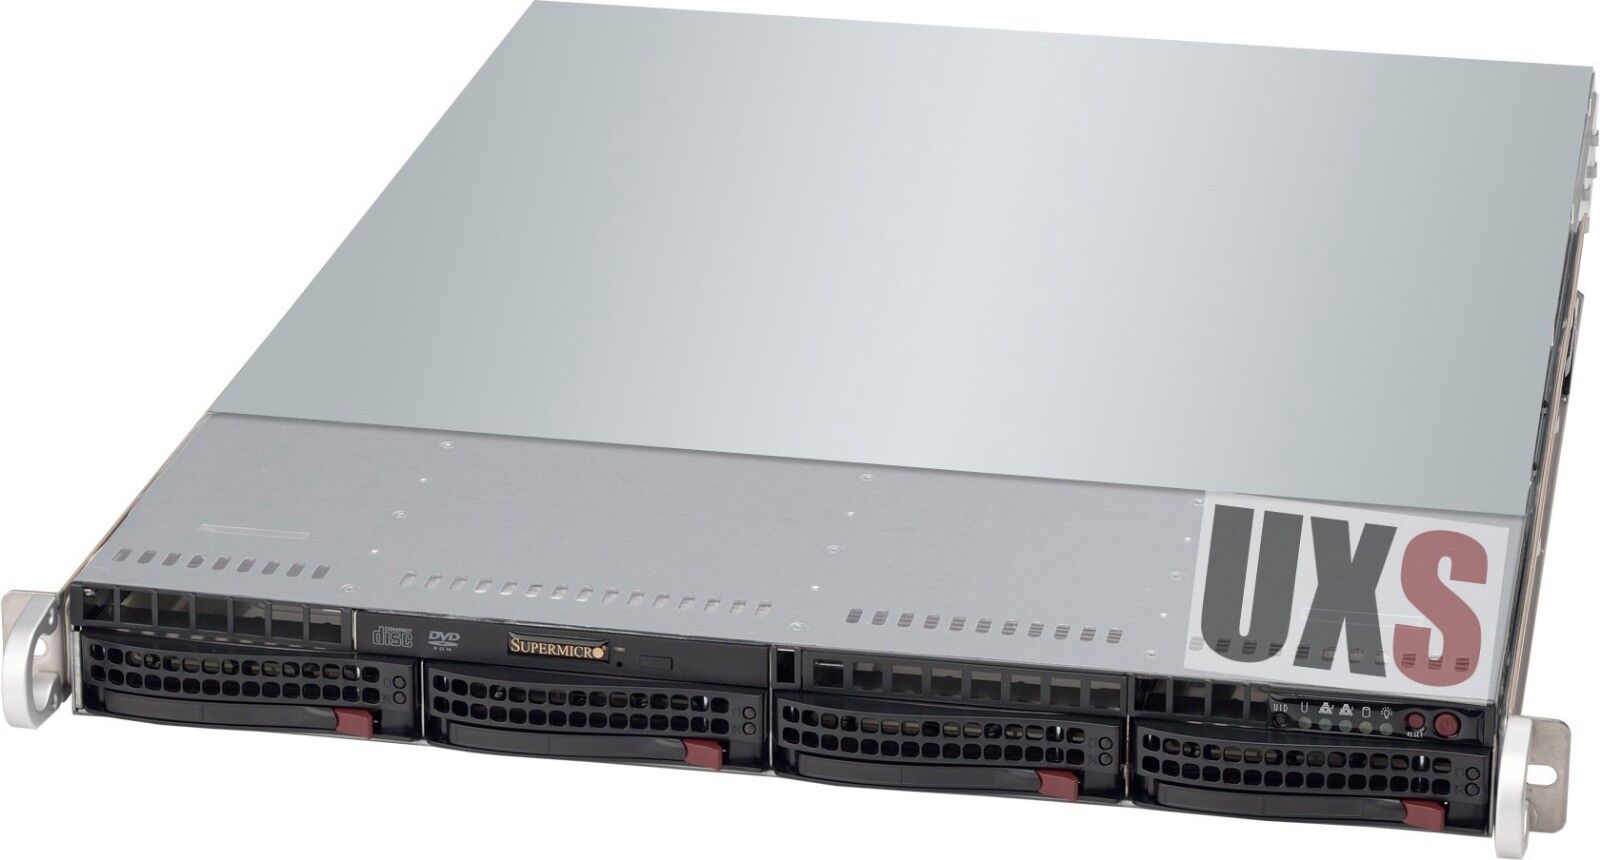 UXS Server 1U Supermicro X9DRi-LN4F+ 2x Xeon E5-2670 V2 2.5Ghz 10 Core 256GB RAM